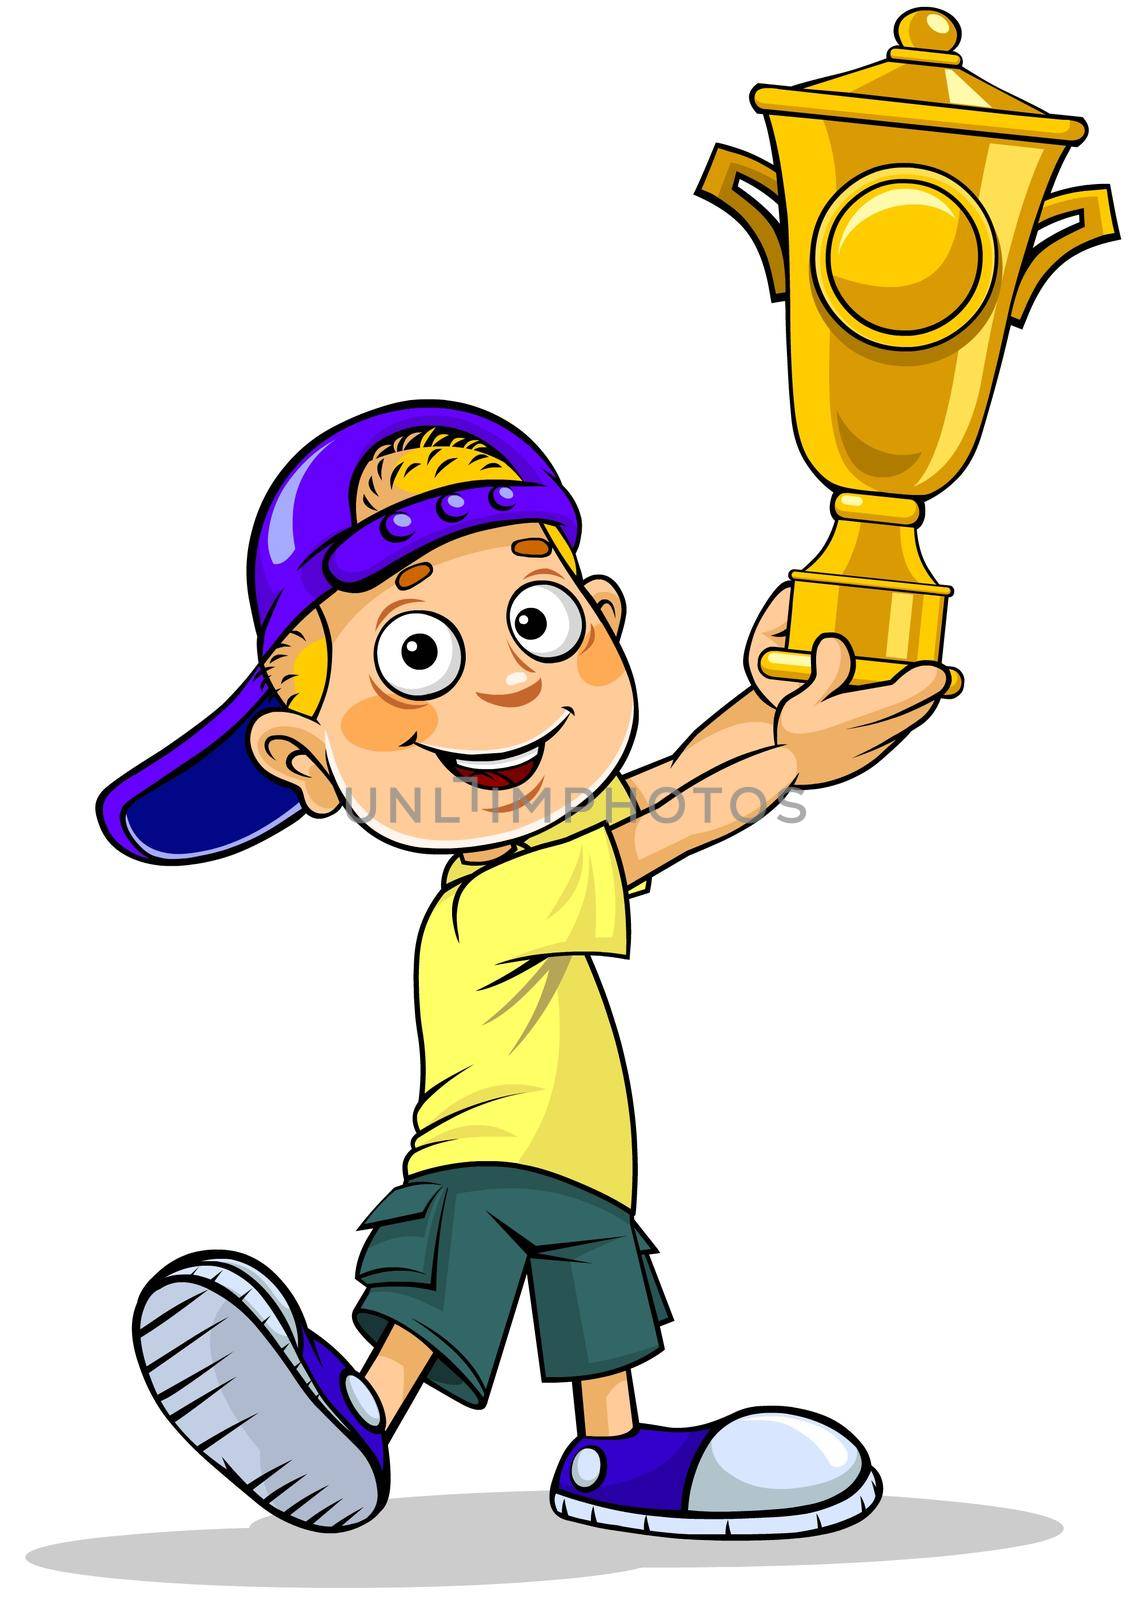 Color illustration of a cartoon schoolboy holding a trophy.